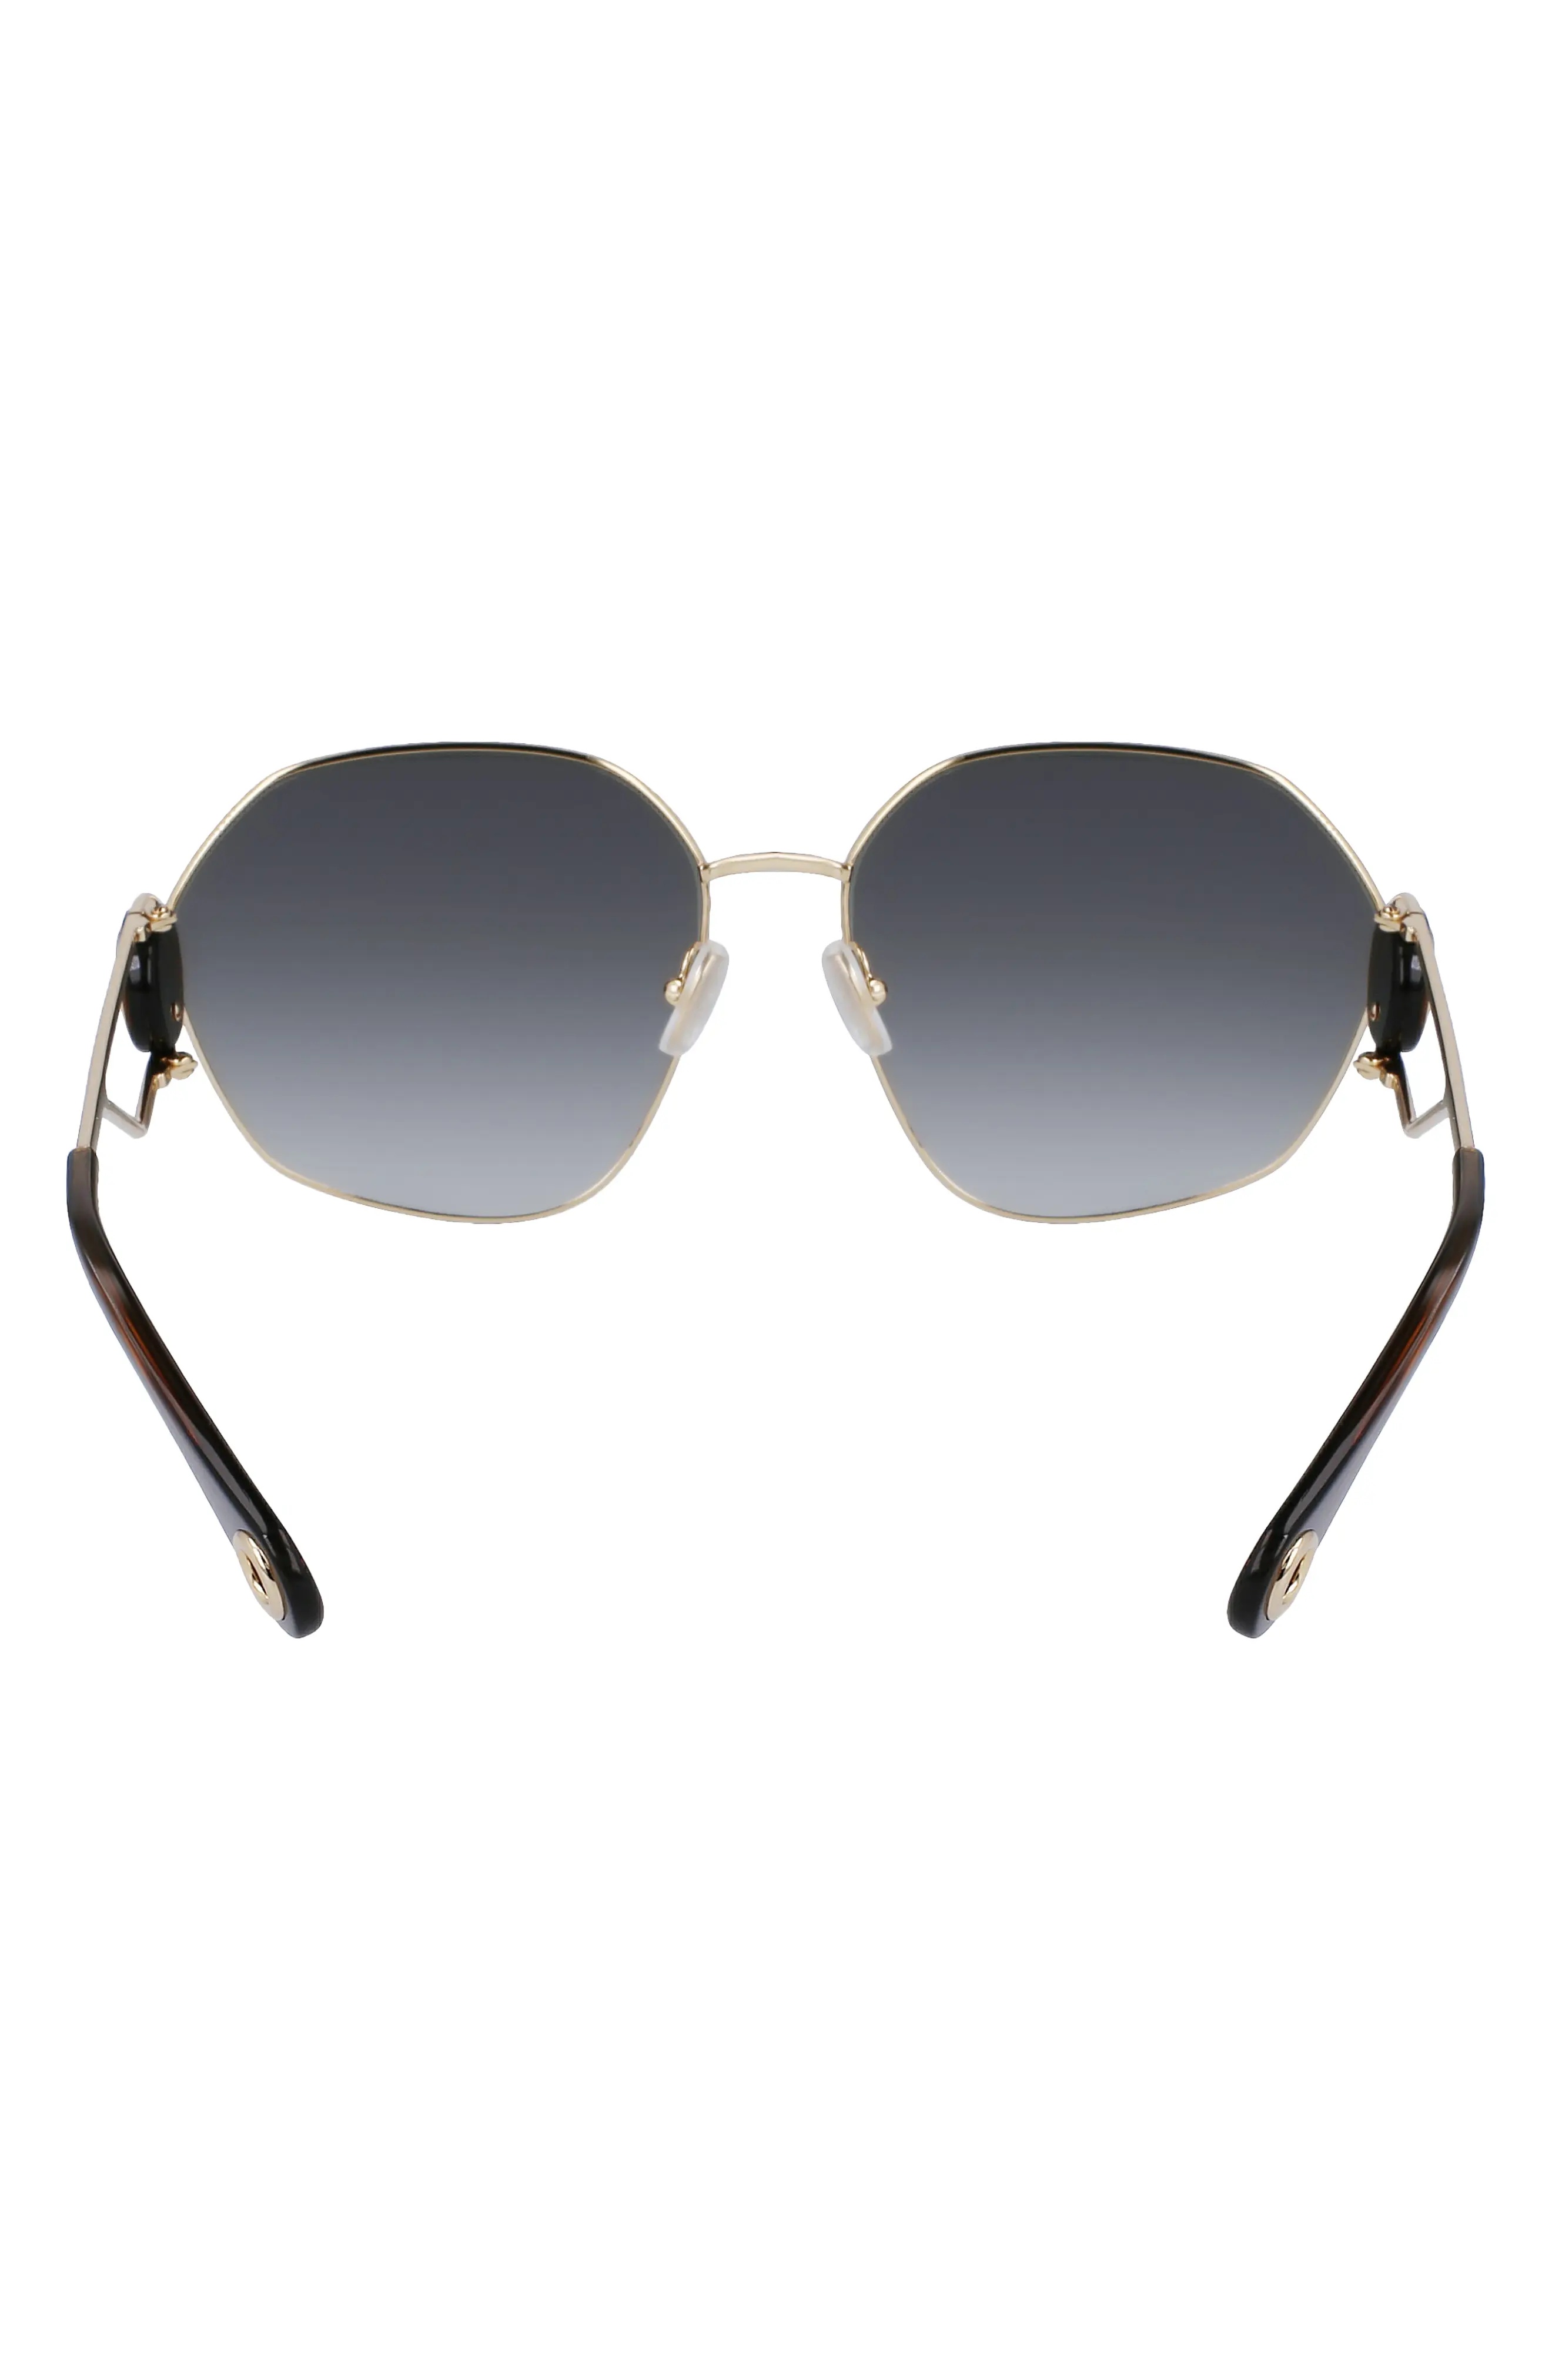 Mother & Child 62mm Oversize Rectangular Sunglasses in Gold/Gradient Khaki - 5